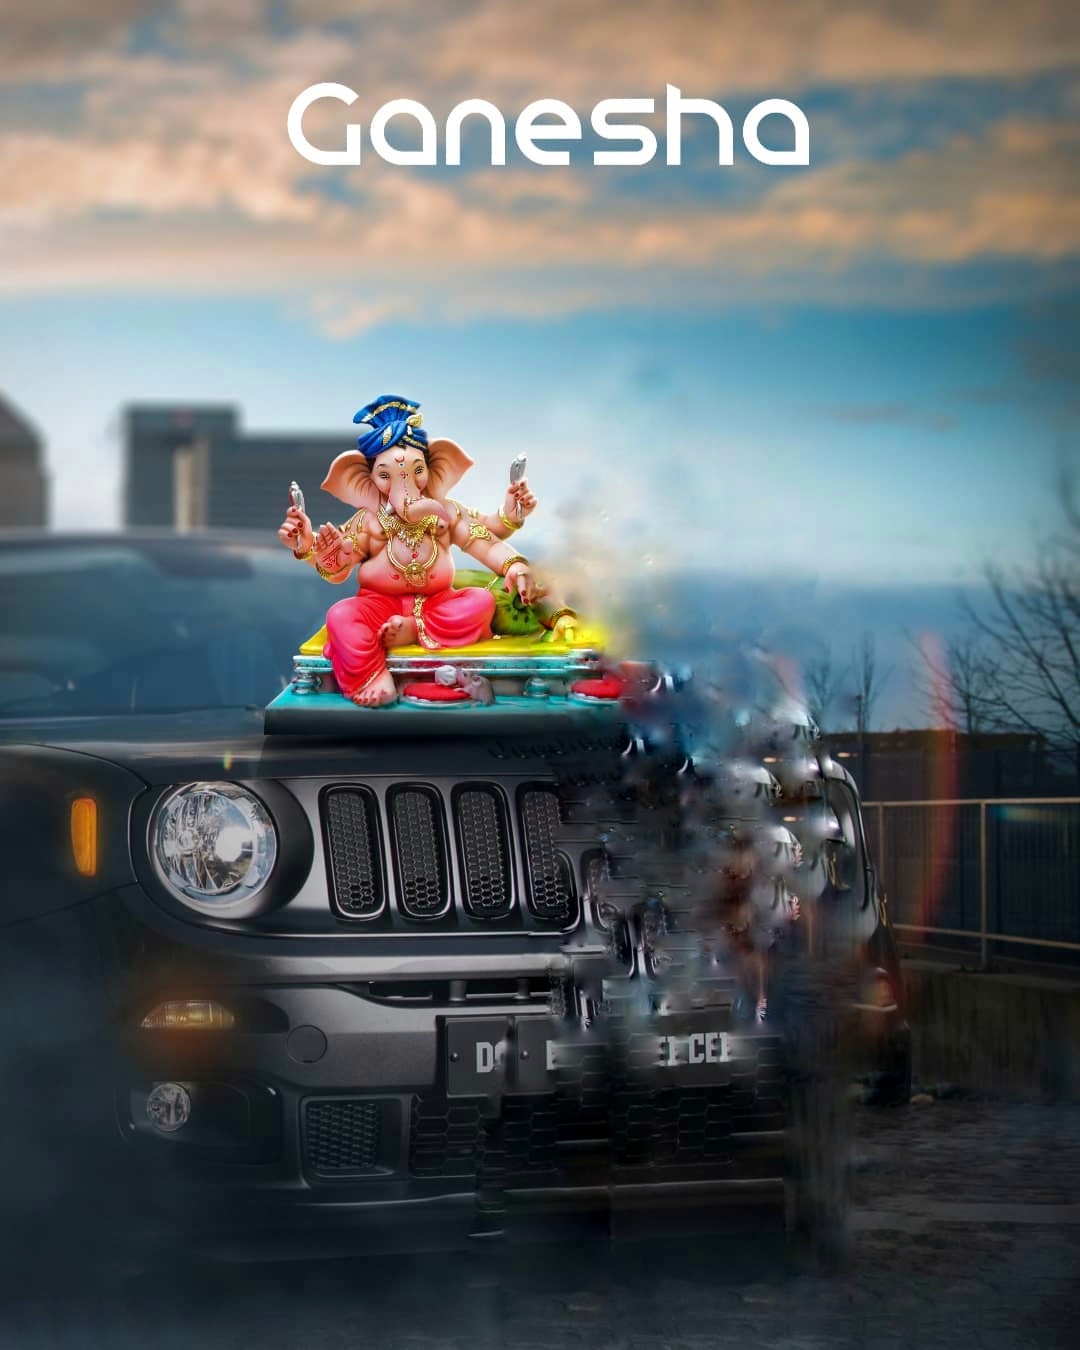 Sony jackson Ganesh chaturthi editing background